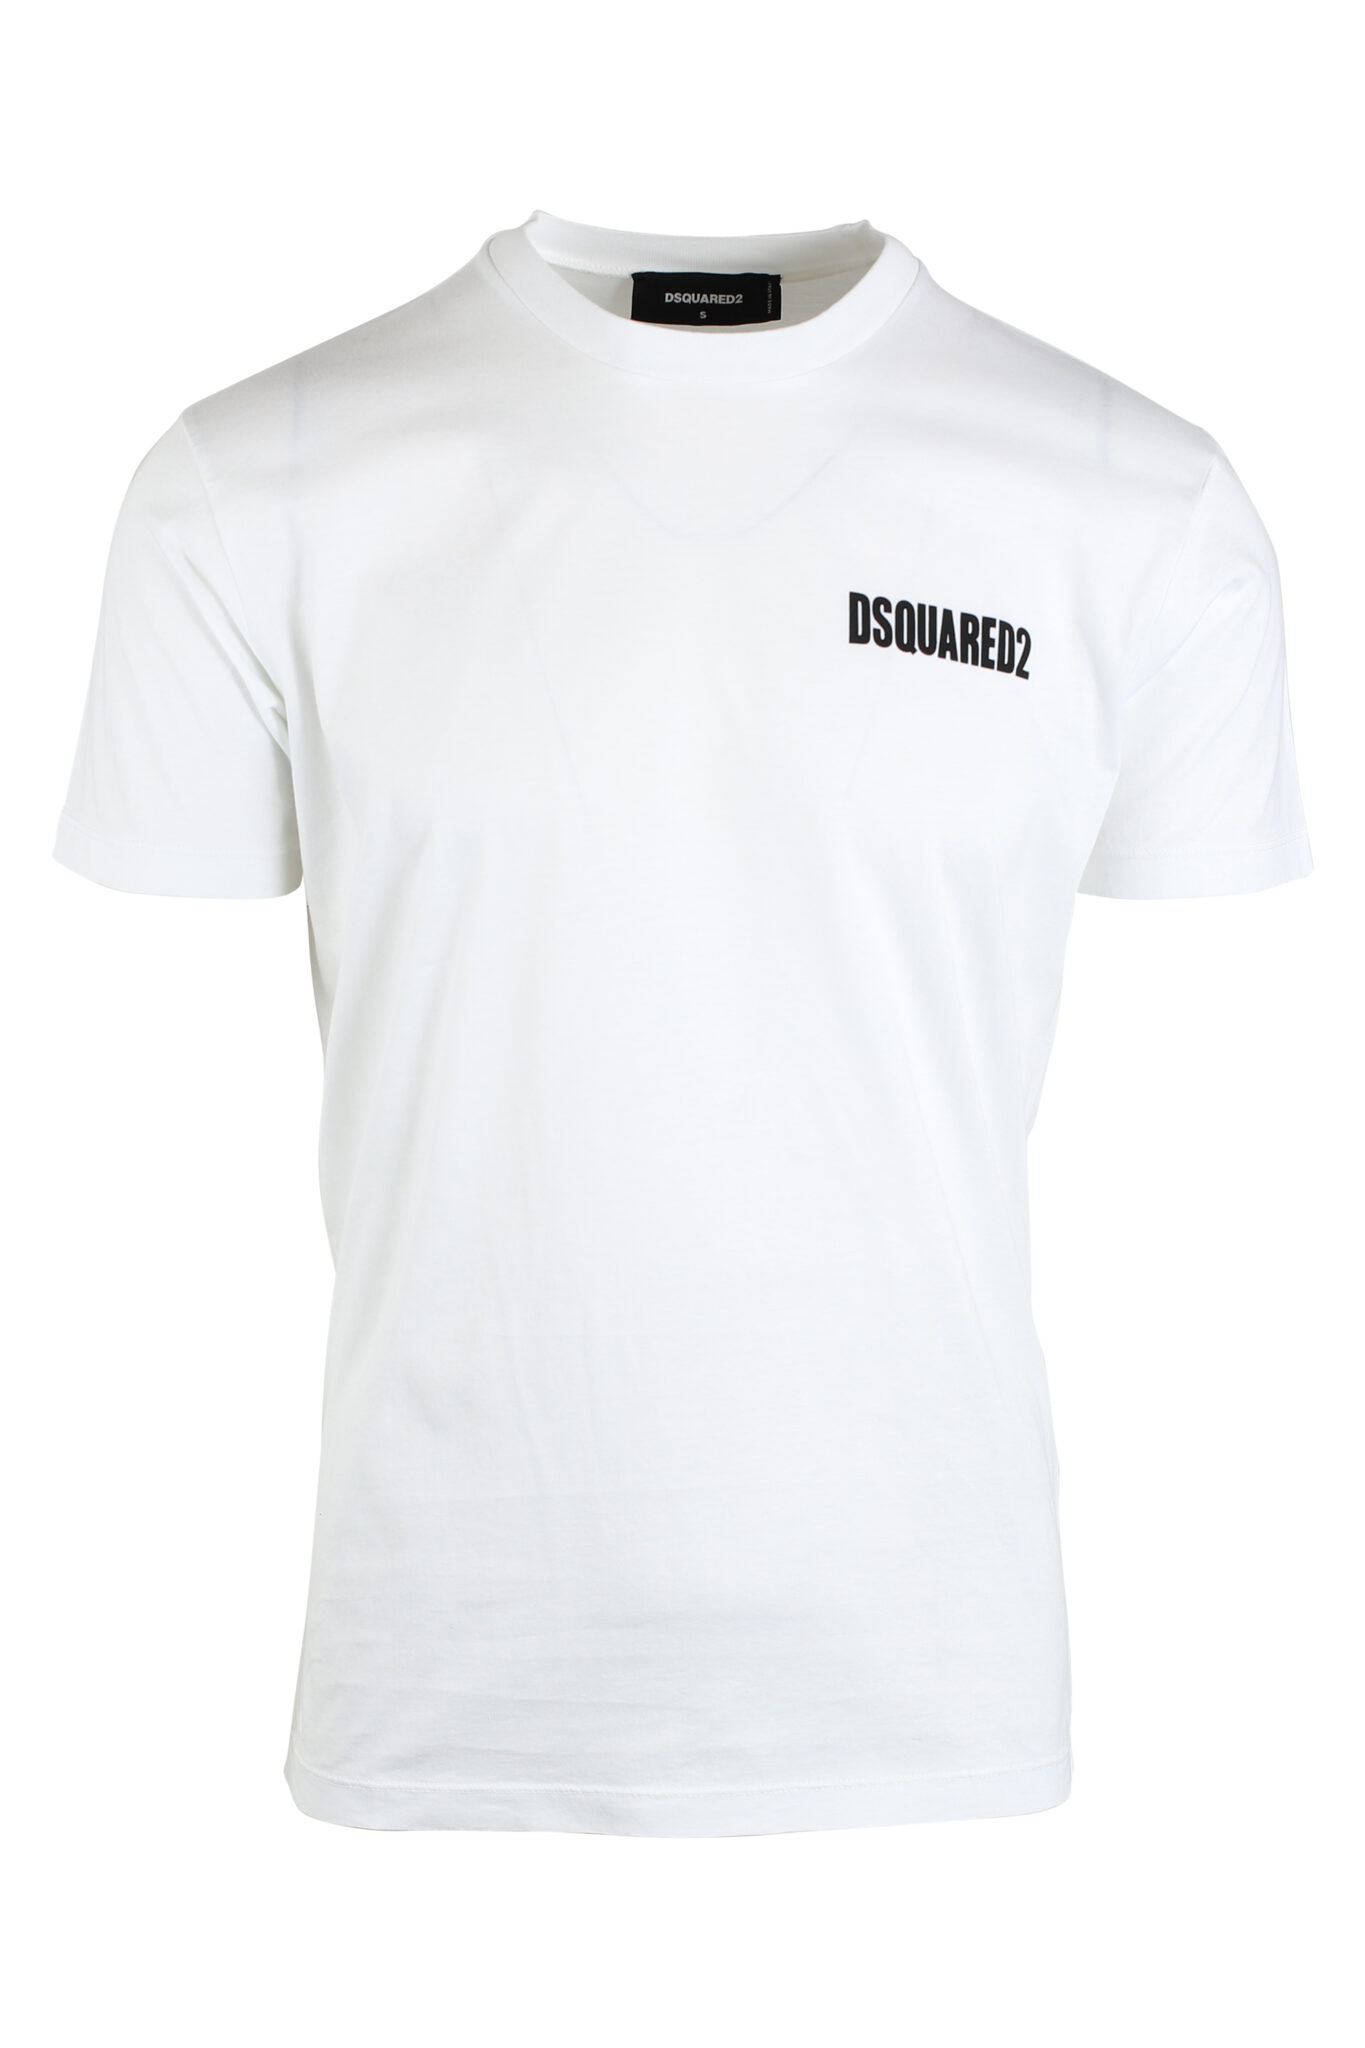 Dsquared2 - Camiseta blanca con minilogo negro - BLS Fashion